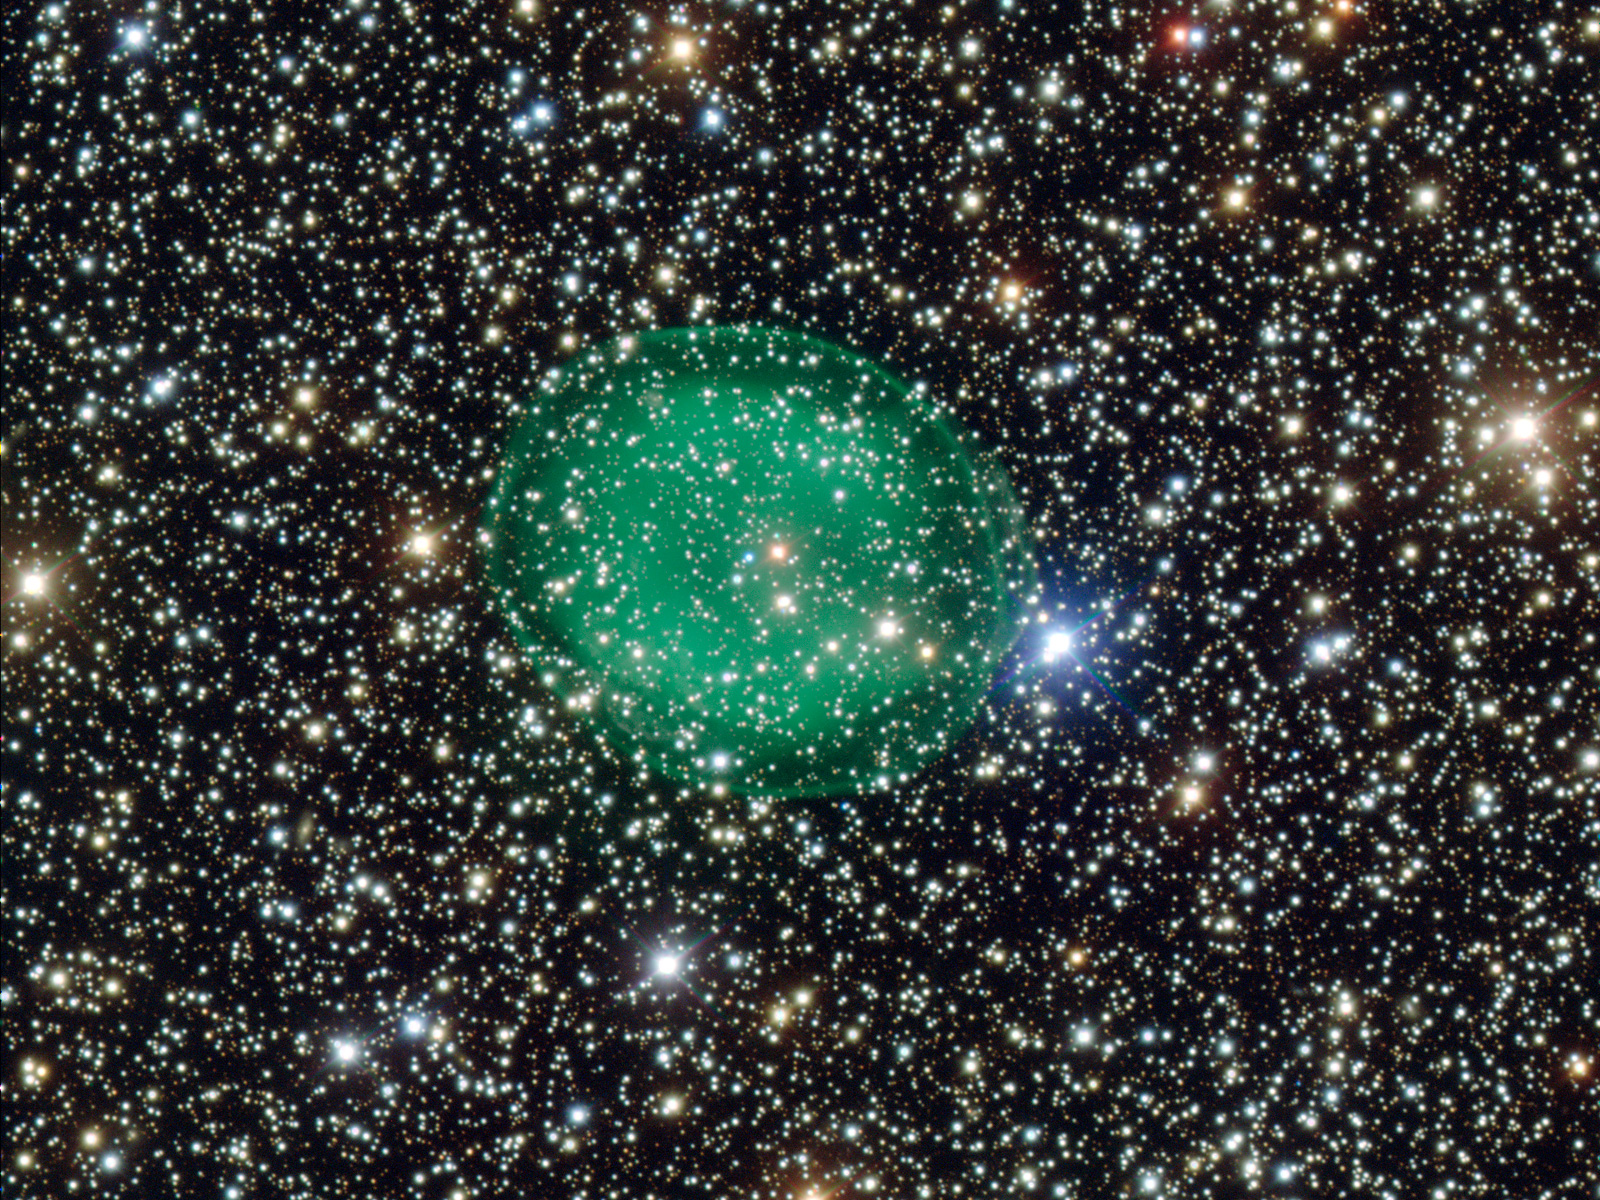  the planetary nebula IC 1295 wallpaperjpg   Wikimedia Commons